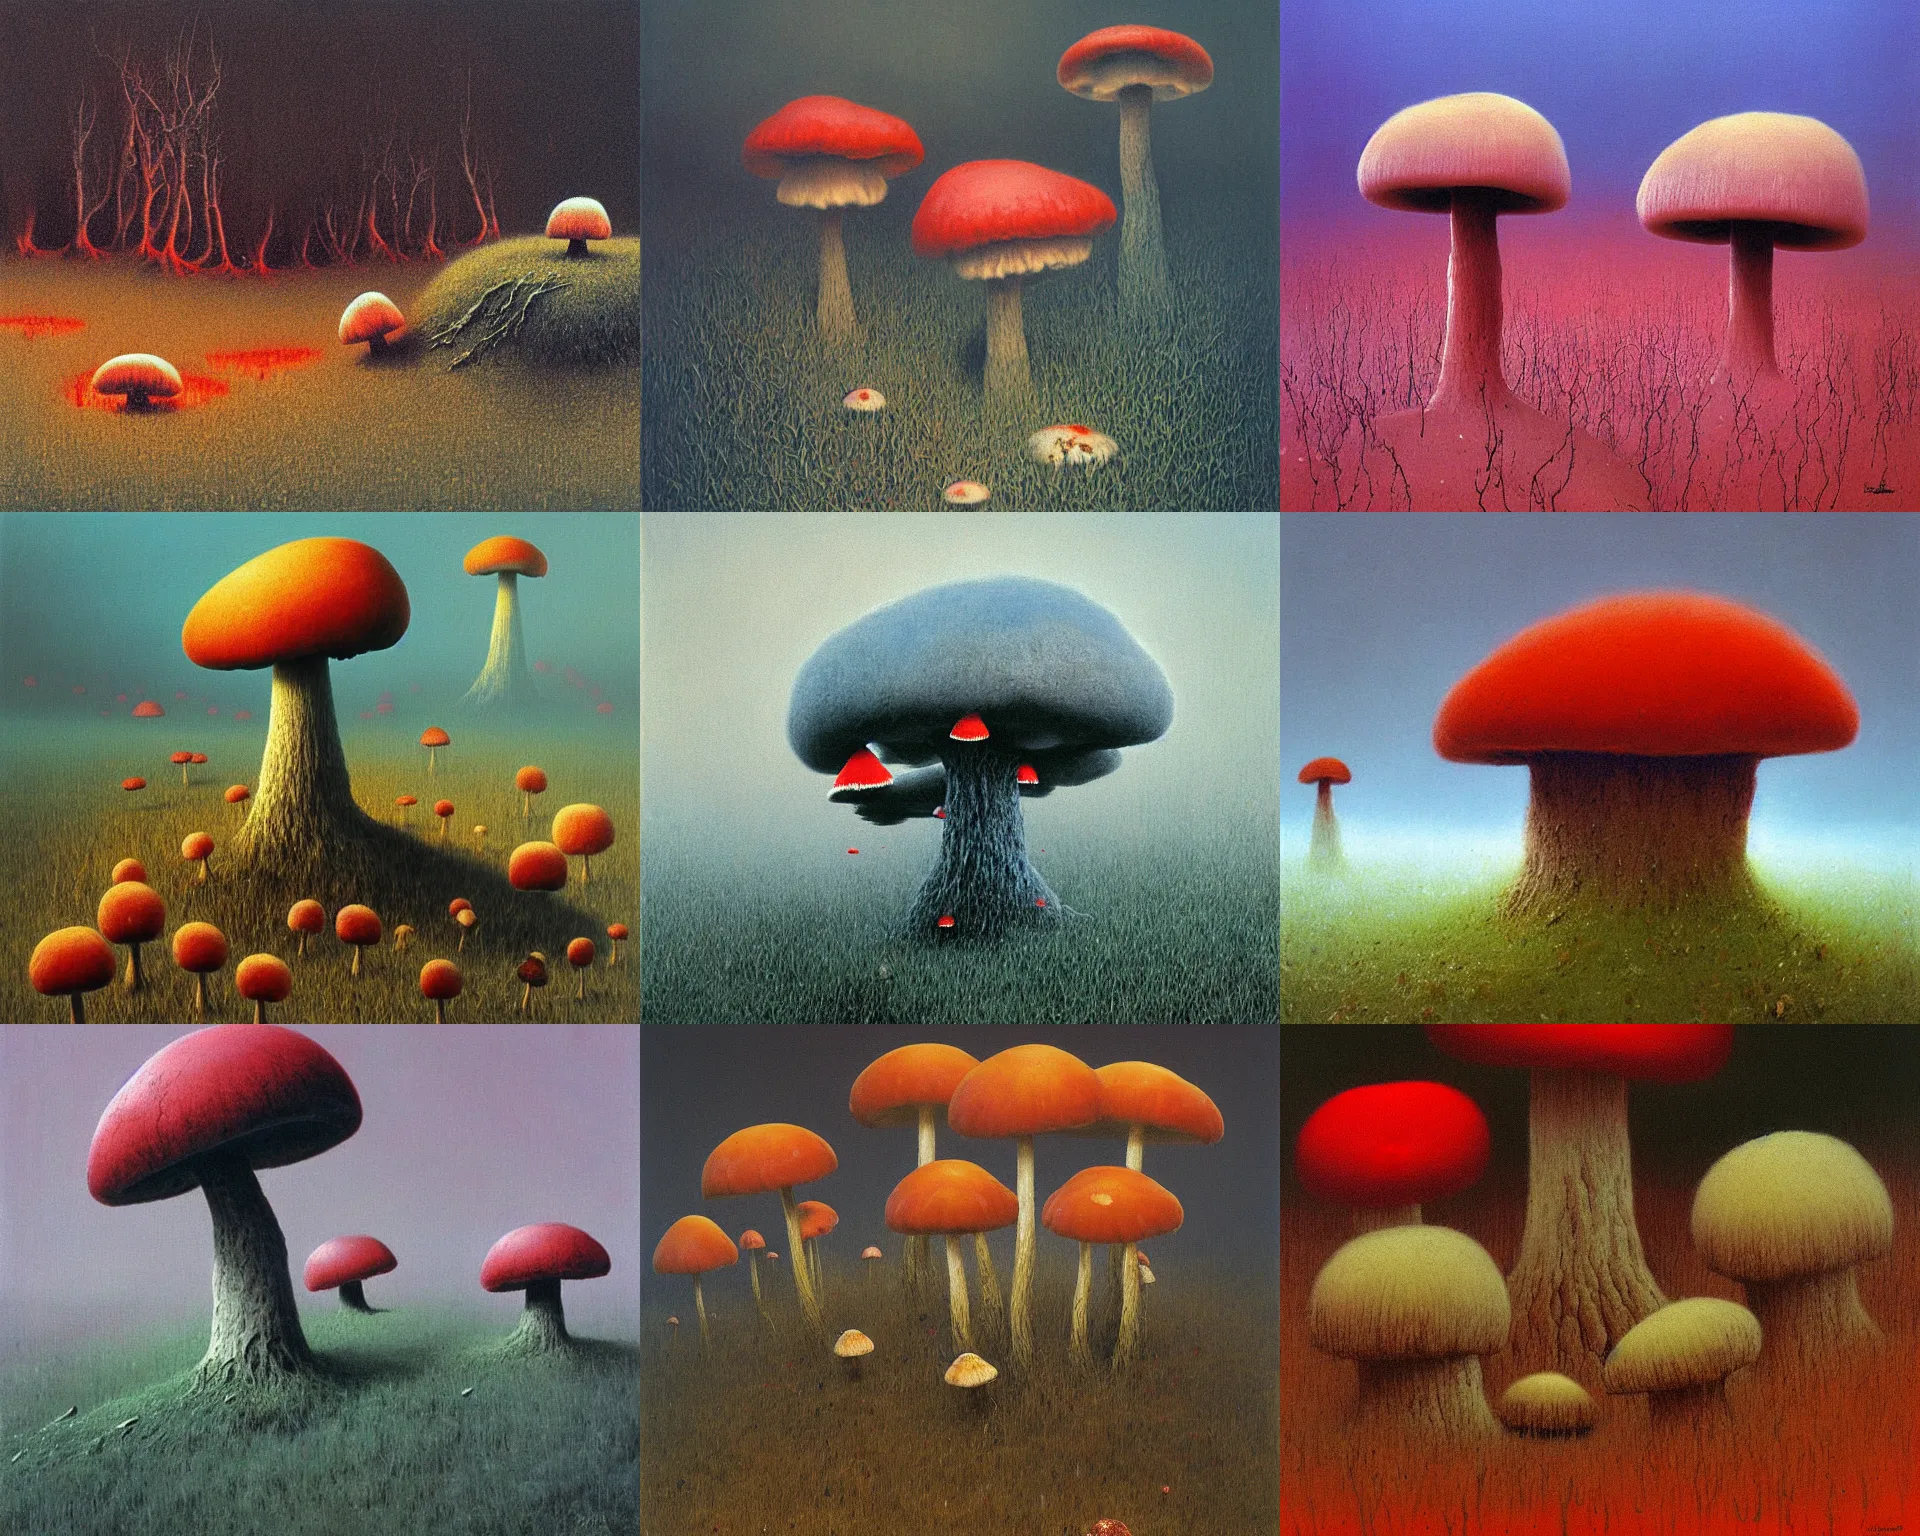 Prompt: painting of cute fluffy bloody mushrooms crawling on glowing ground by zdzislav beksinski